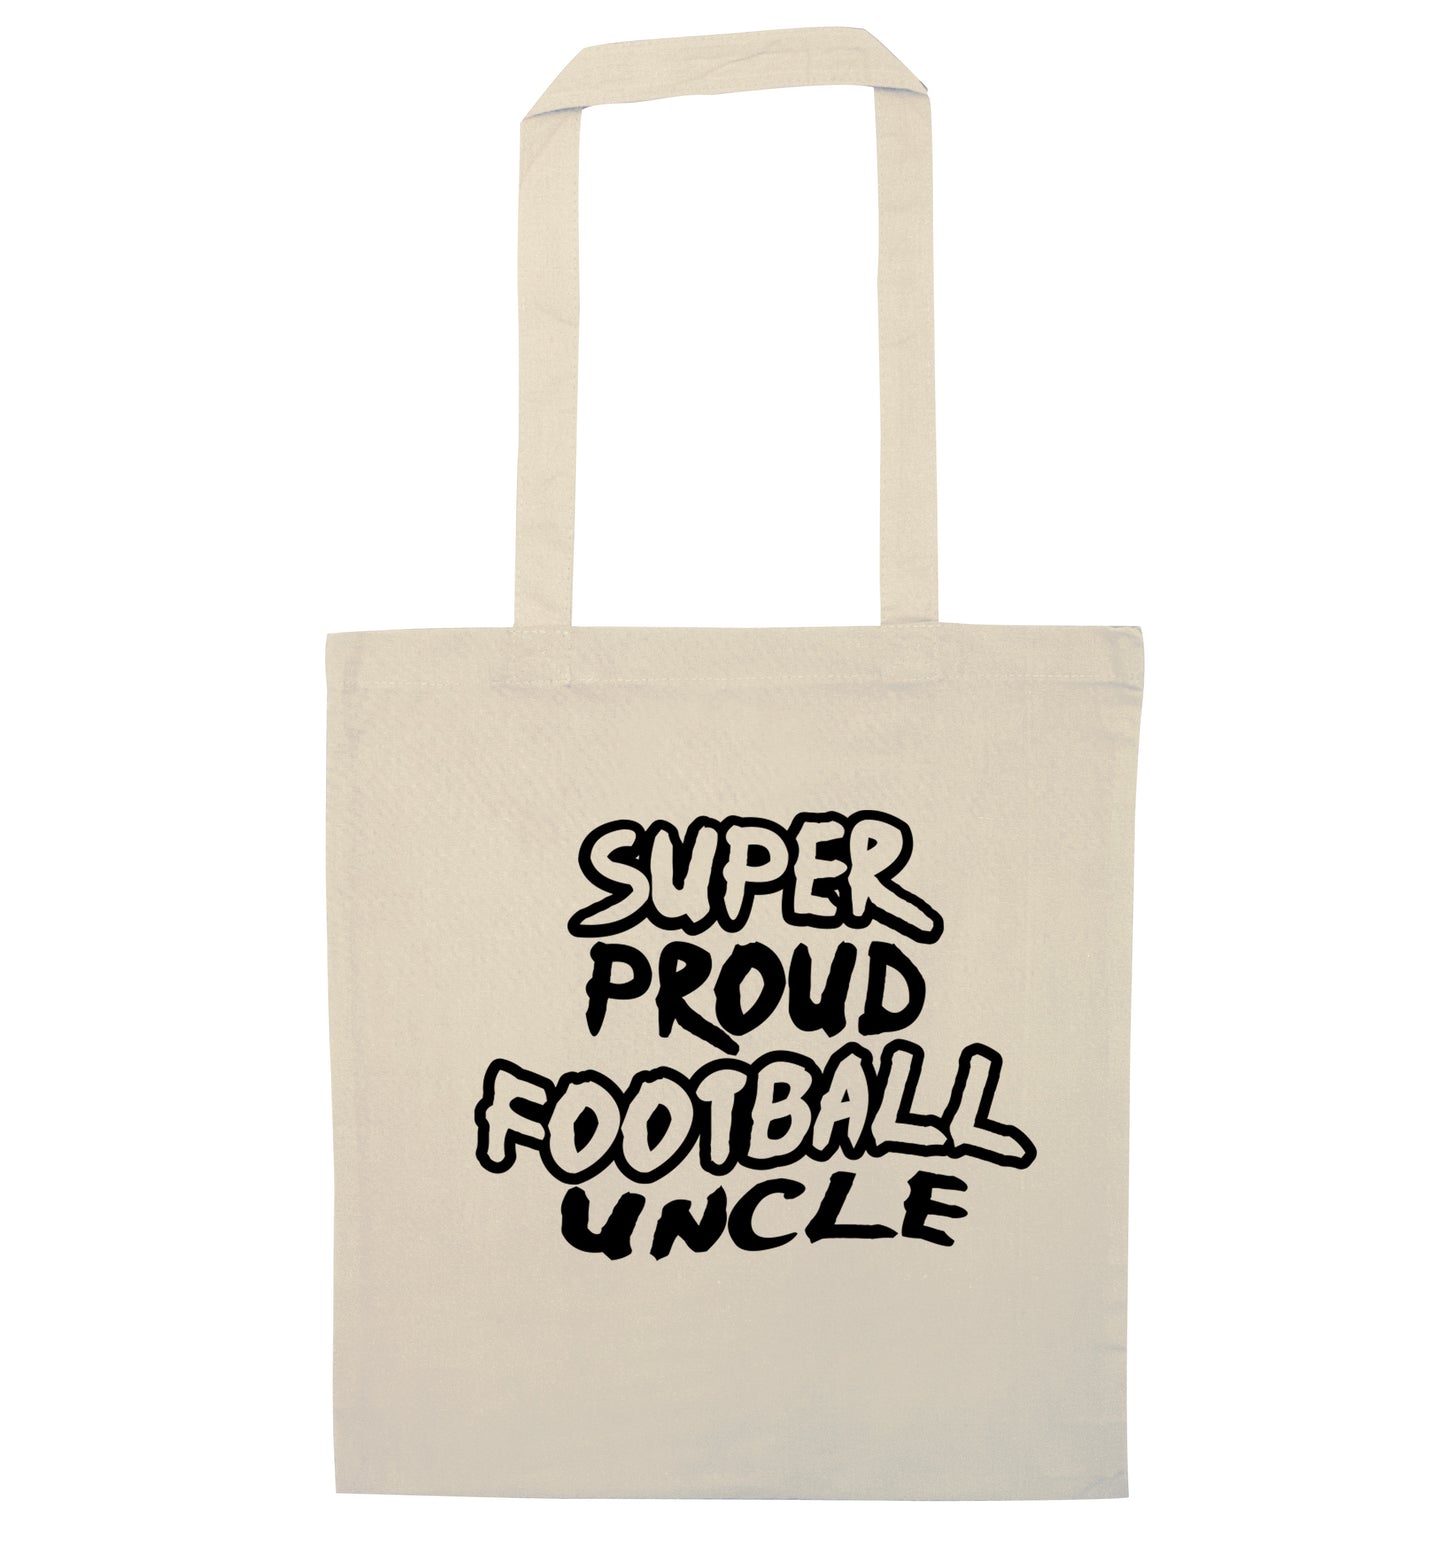 Super proud football uncle natural tote bag